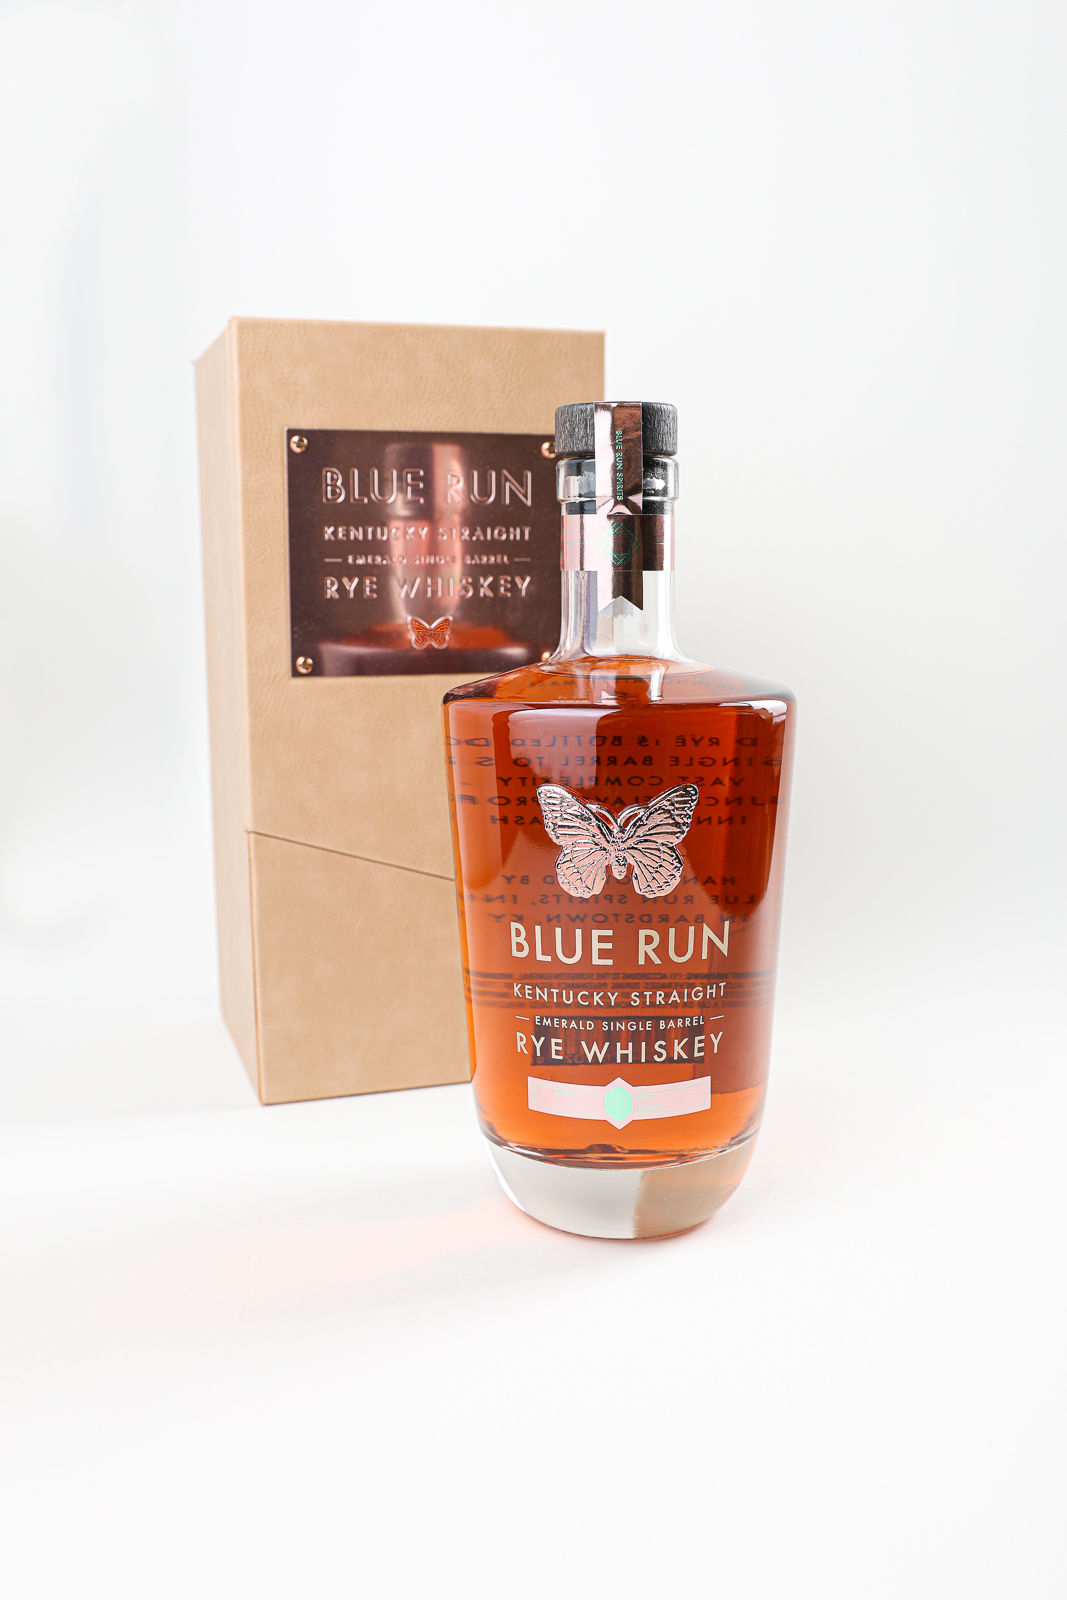 Blue Run Spirits Releases First Single Barrel Rye Whiskey, Follow Up to Award-Winning Emerald Rye